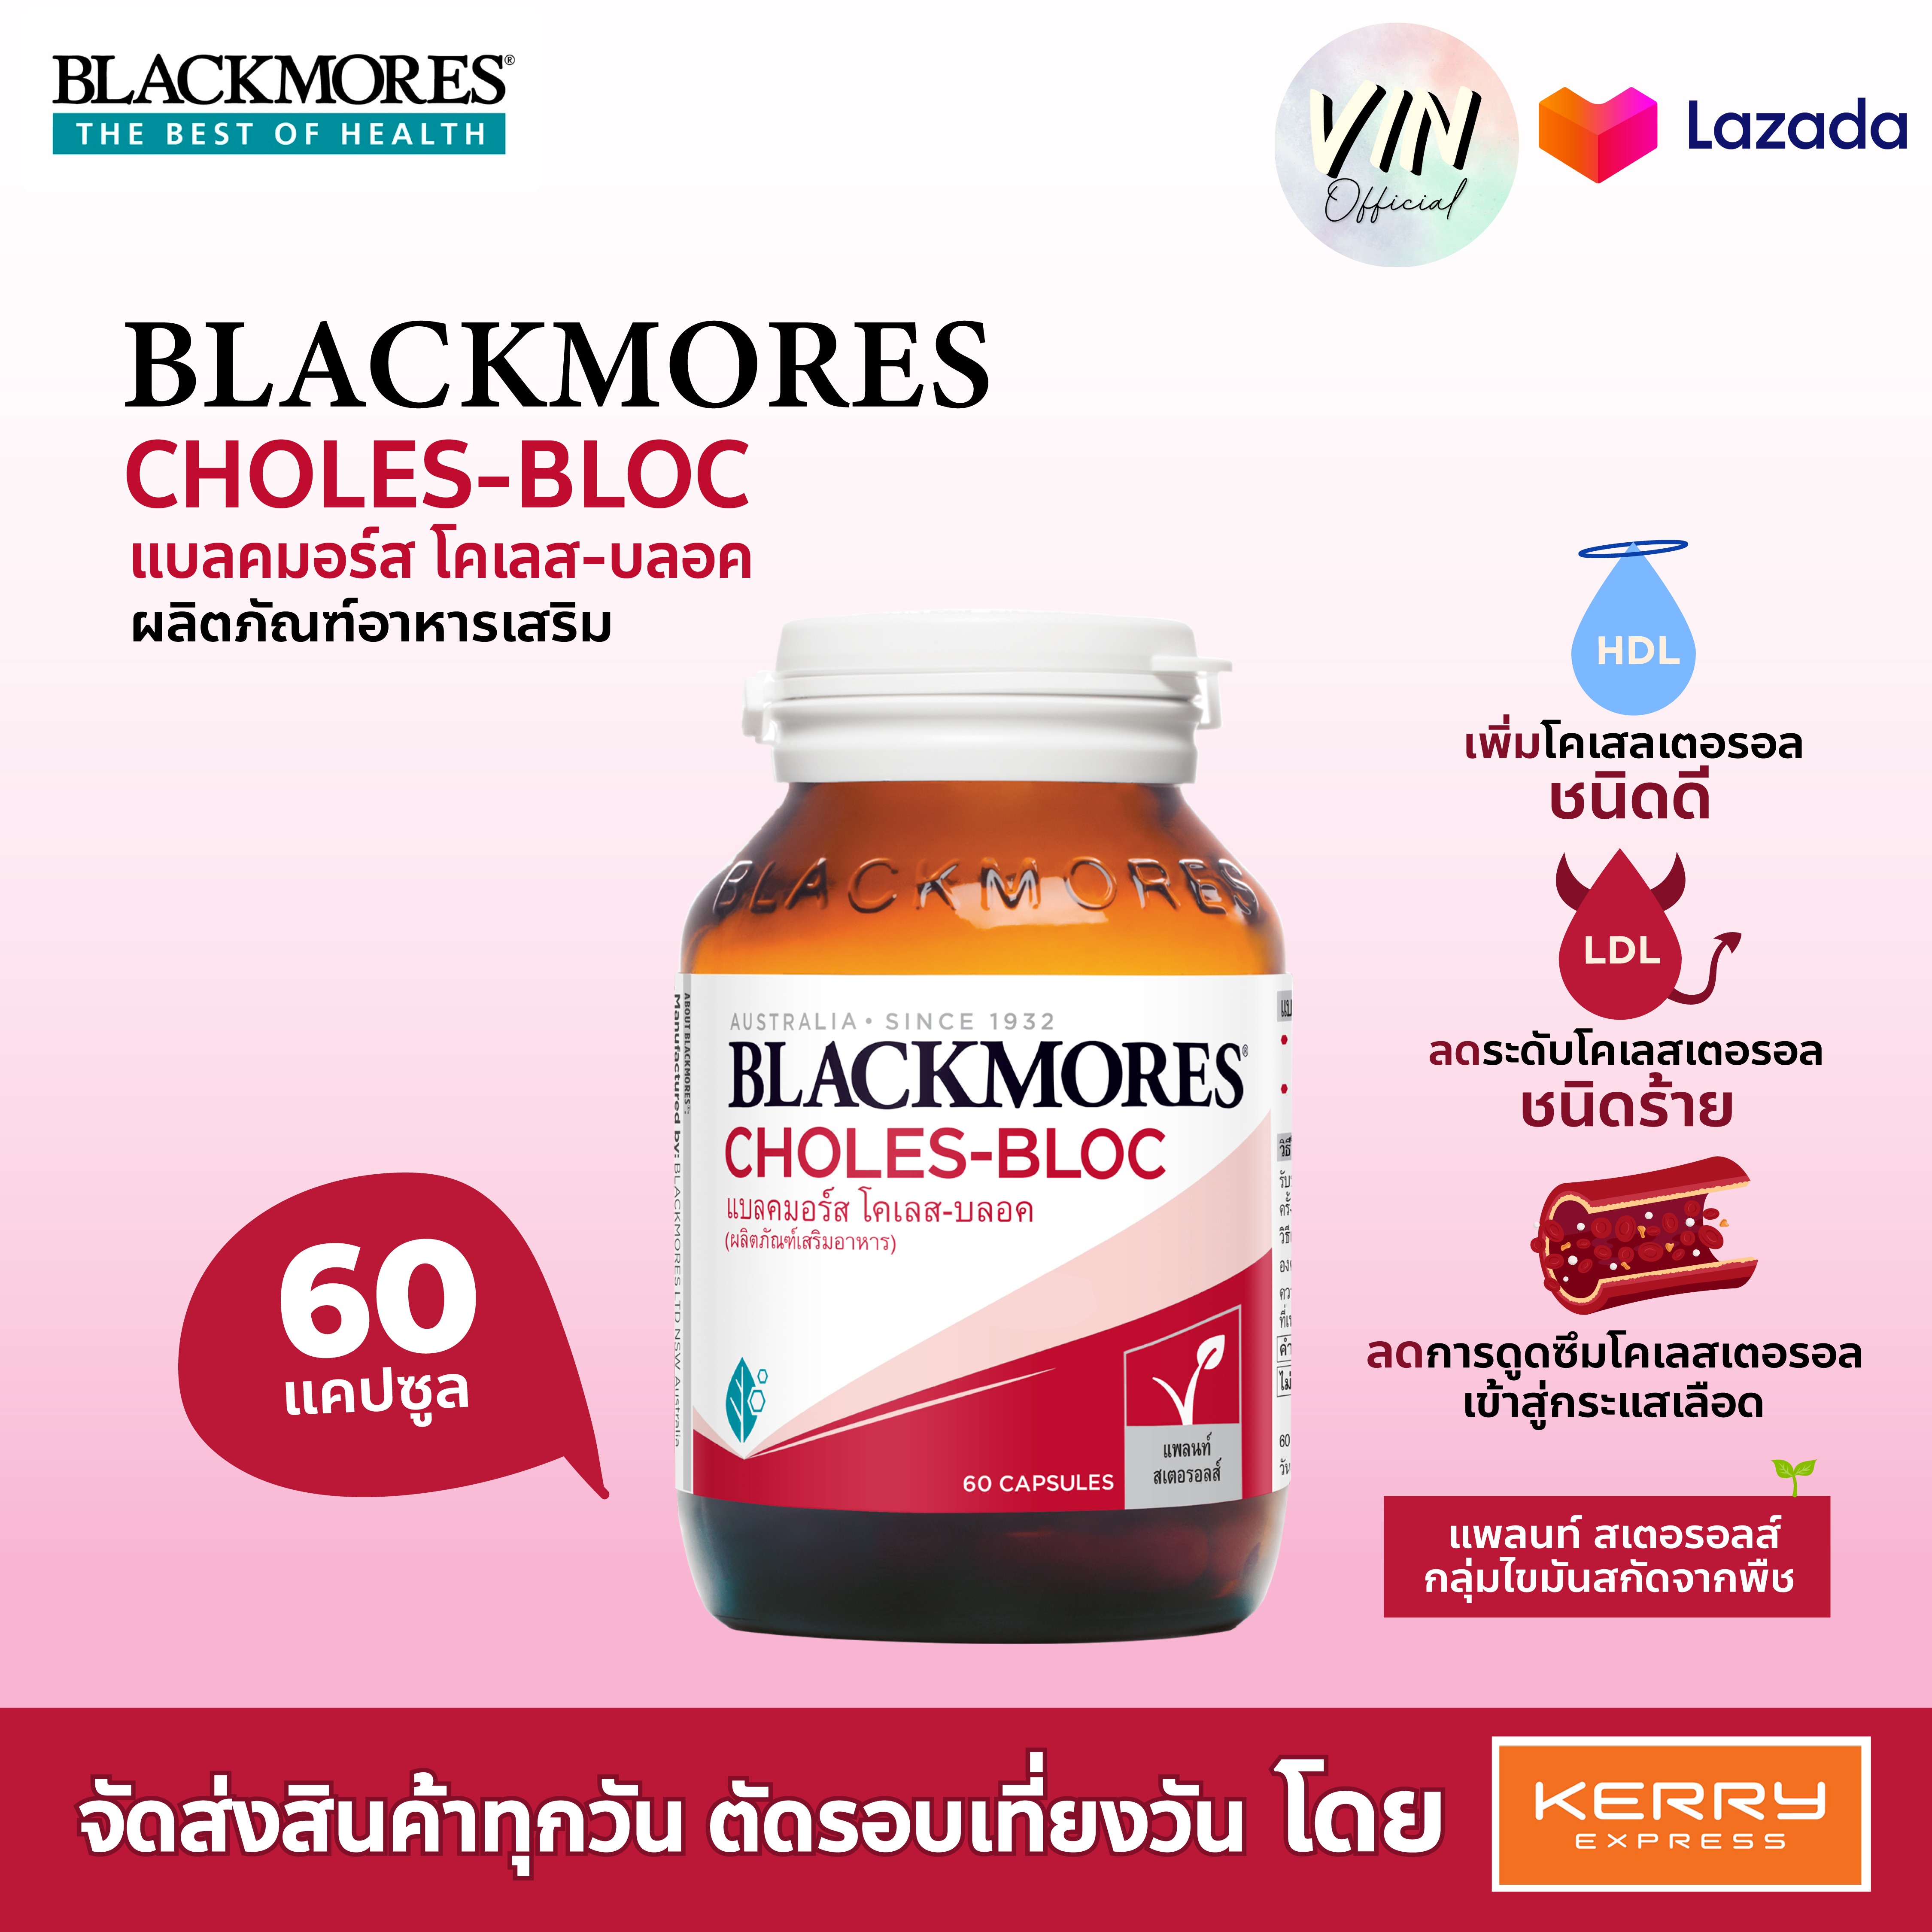 Blackmores Choles-Bloc แบลคมอร์ส โคเสส บลอค ลดระดับไขมันและโคเลสเตอรอลในเลือด (60 แคปซูล)